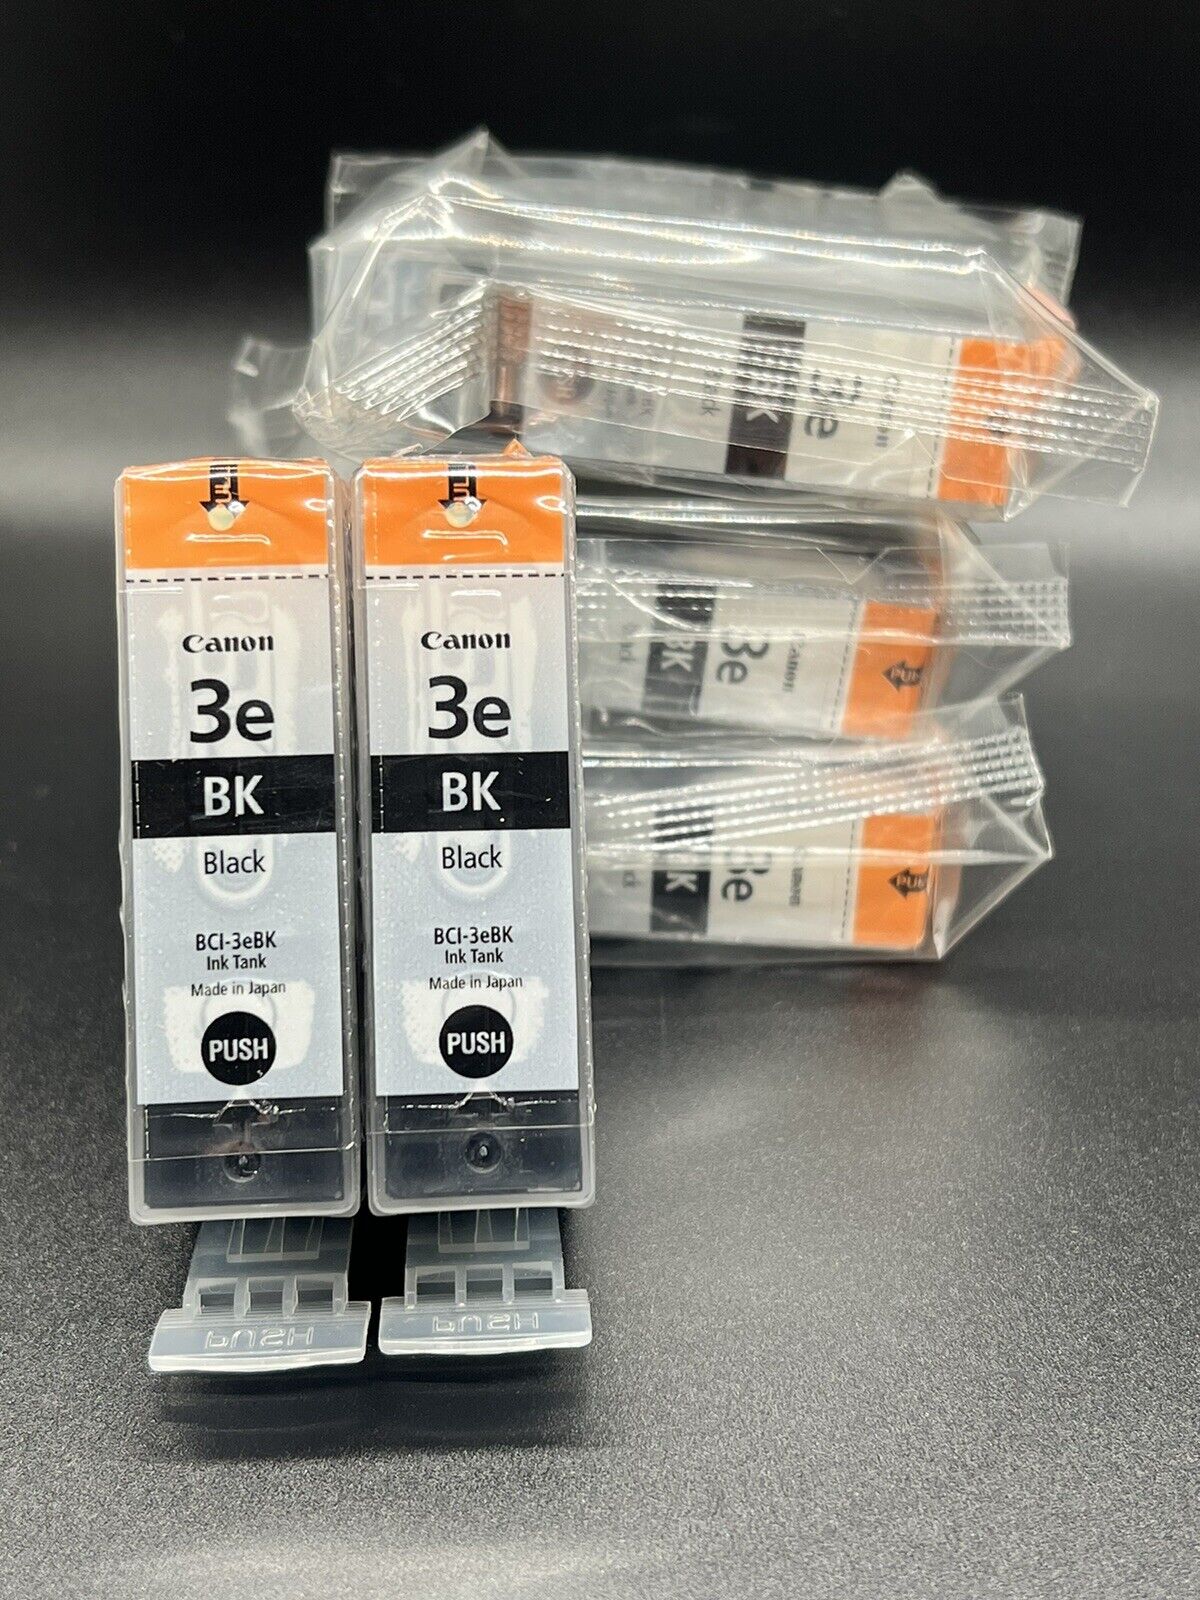 Genuine Canon 3e BK 5-Pack Black Ink Cartridges, New - No Box